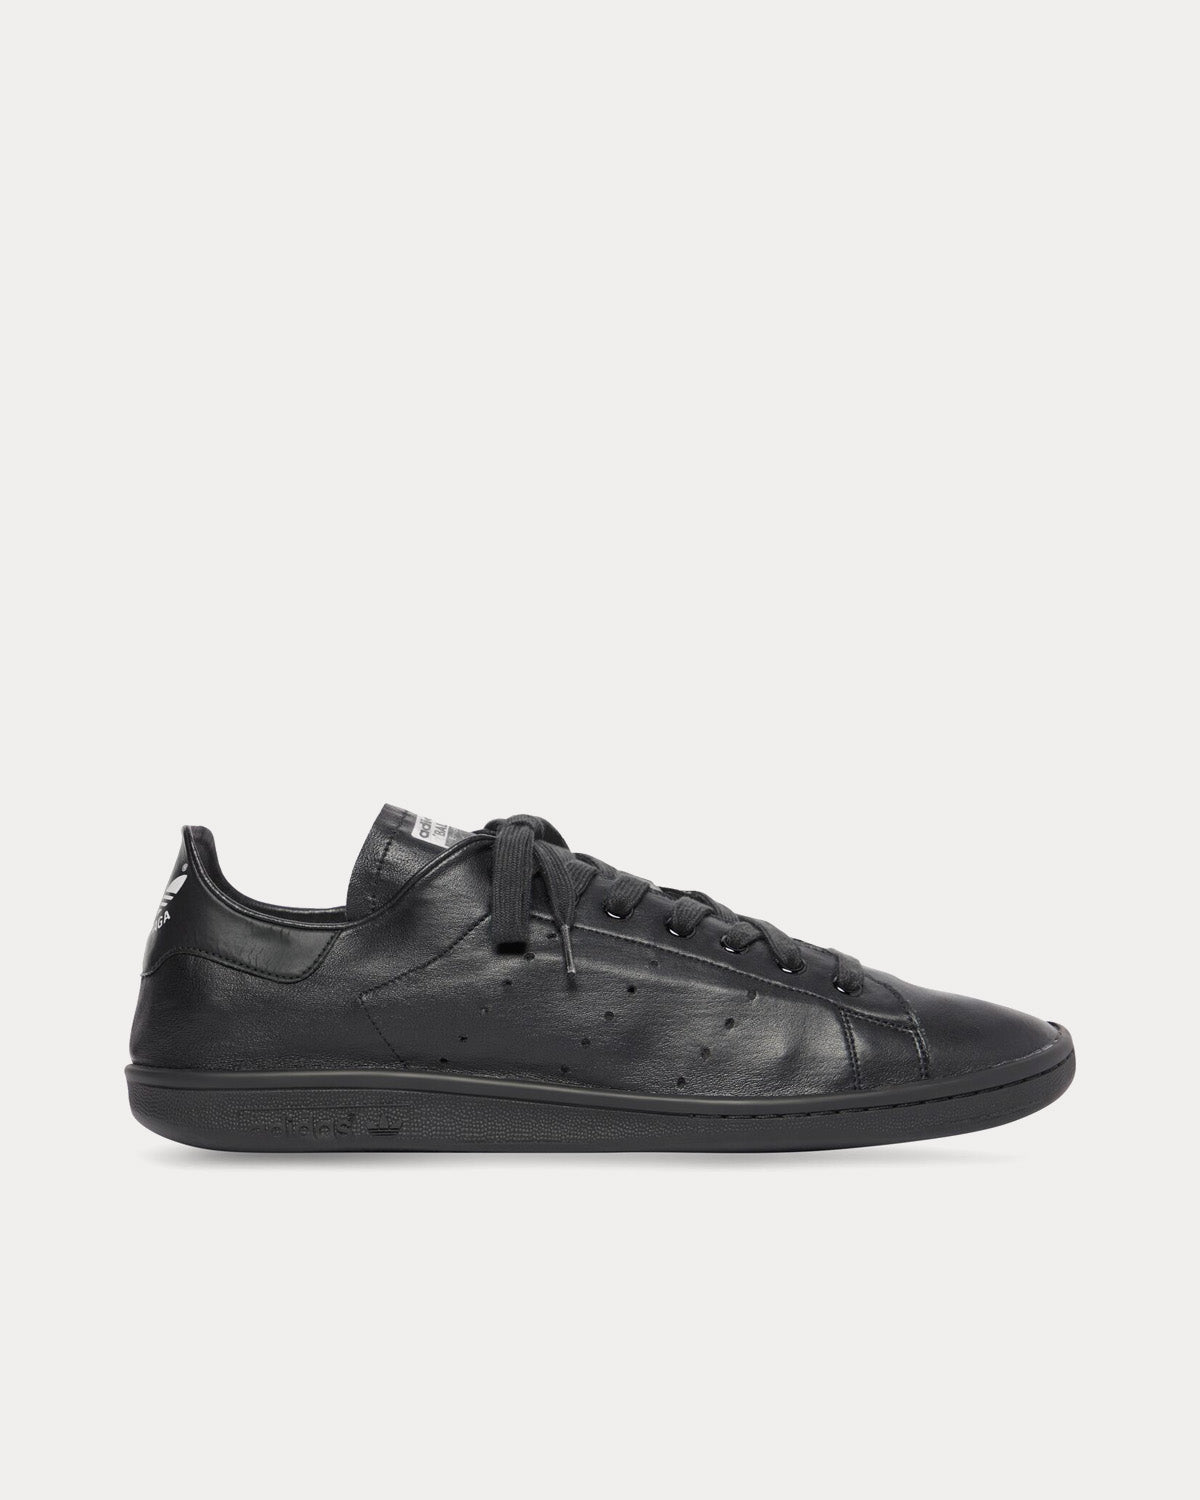 Balenciaga x Adidas - Stan Smith Leather Black Low Top Sneakers